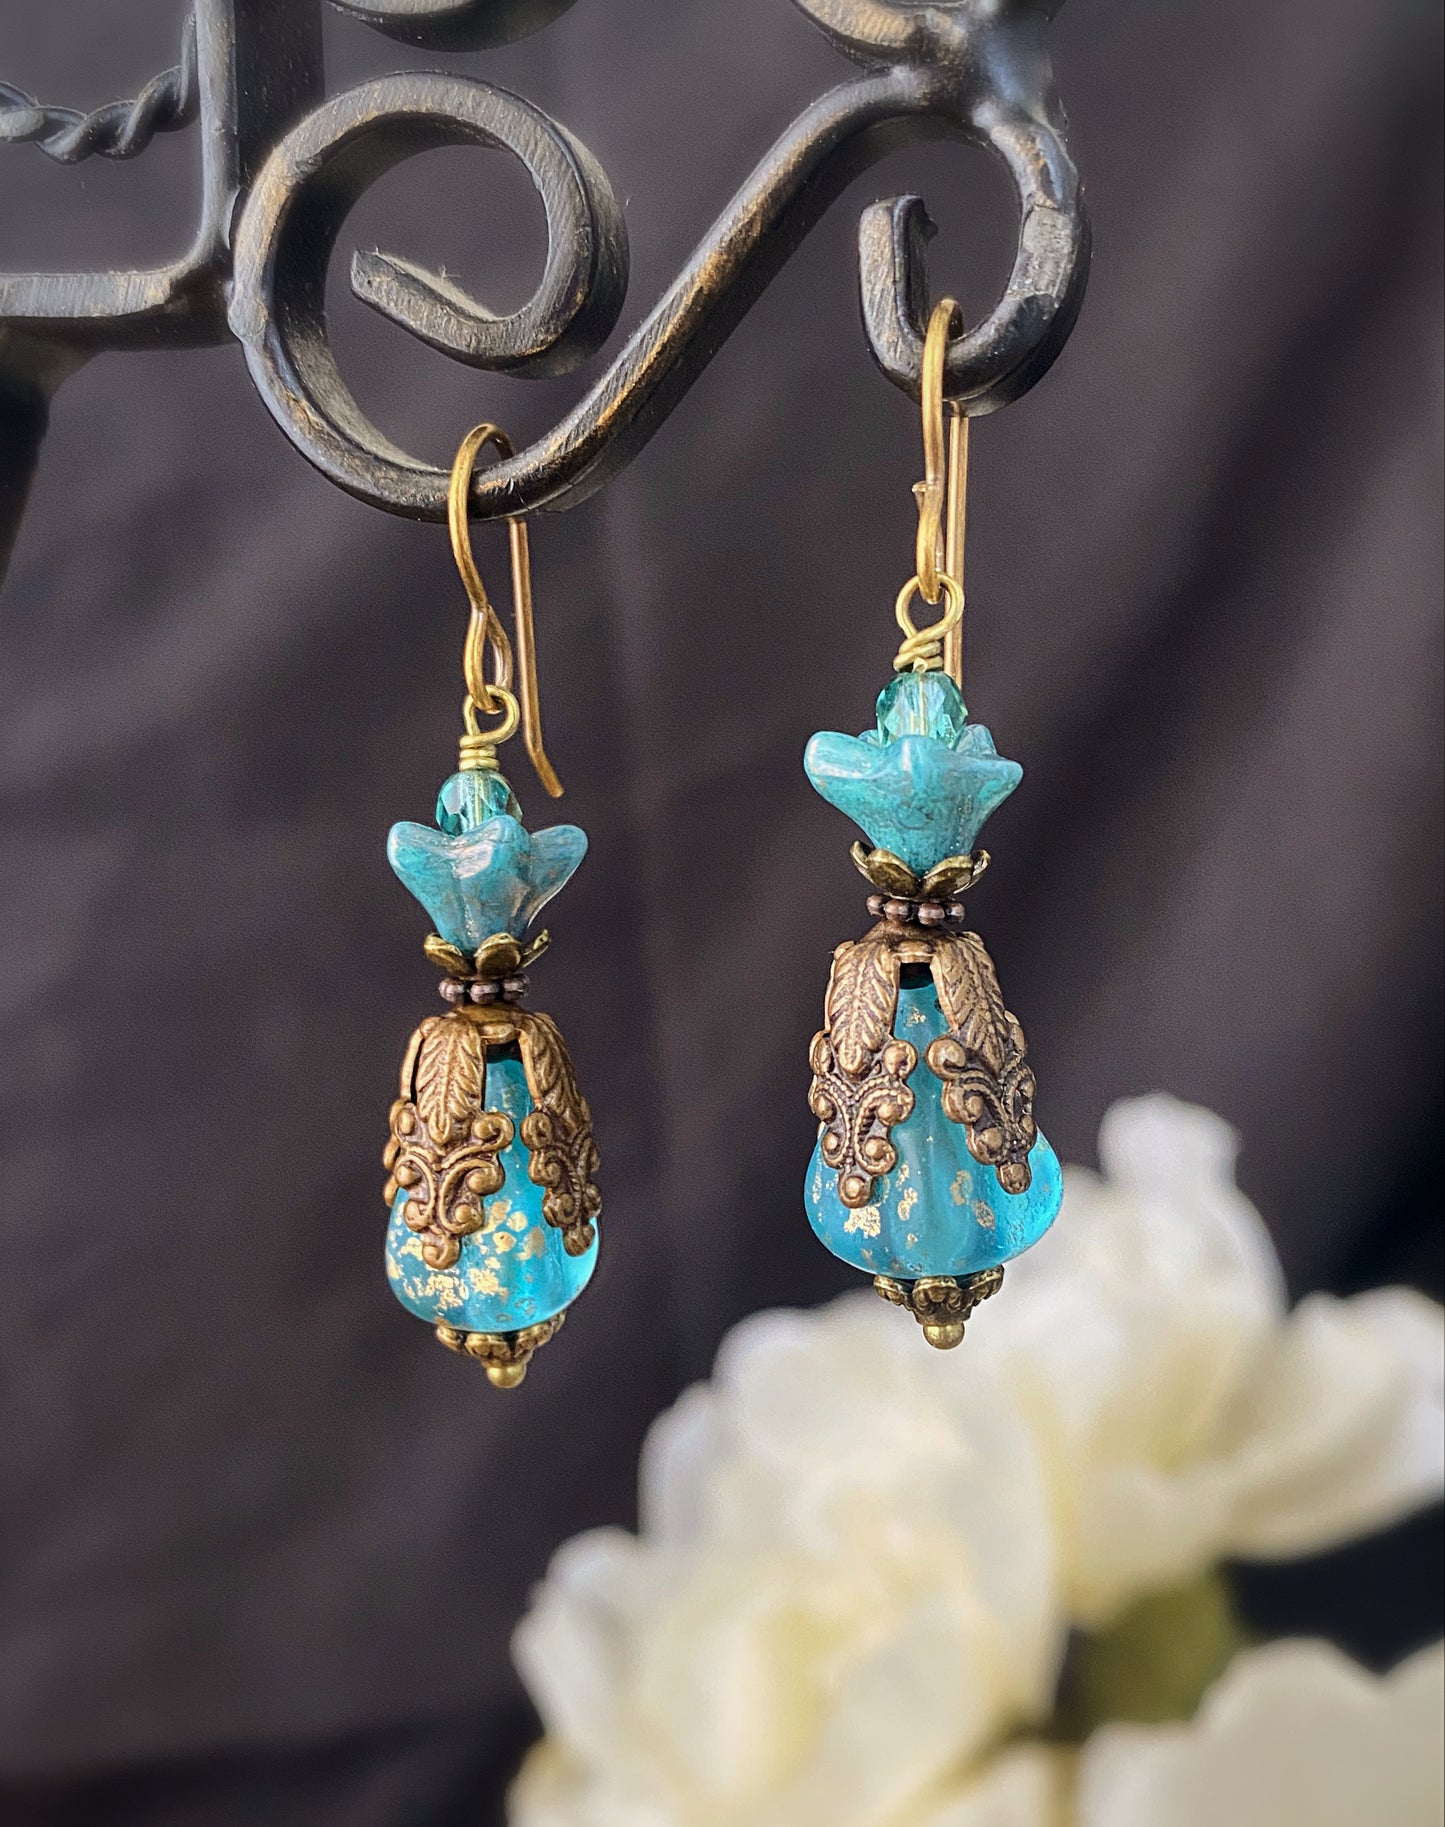 Blue Czech glass, chocolate bronze filigree flower bead caps, and bronze metal earrings.